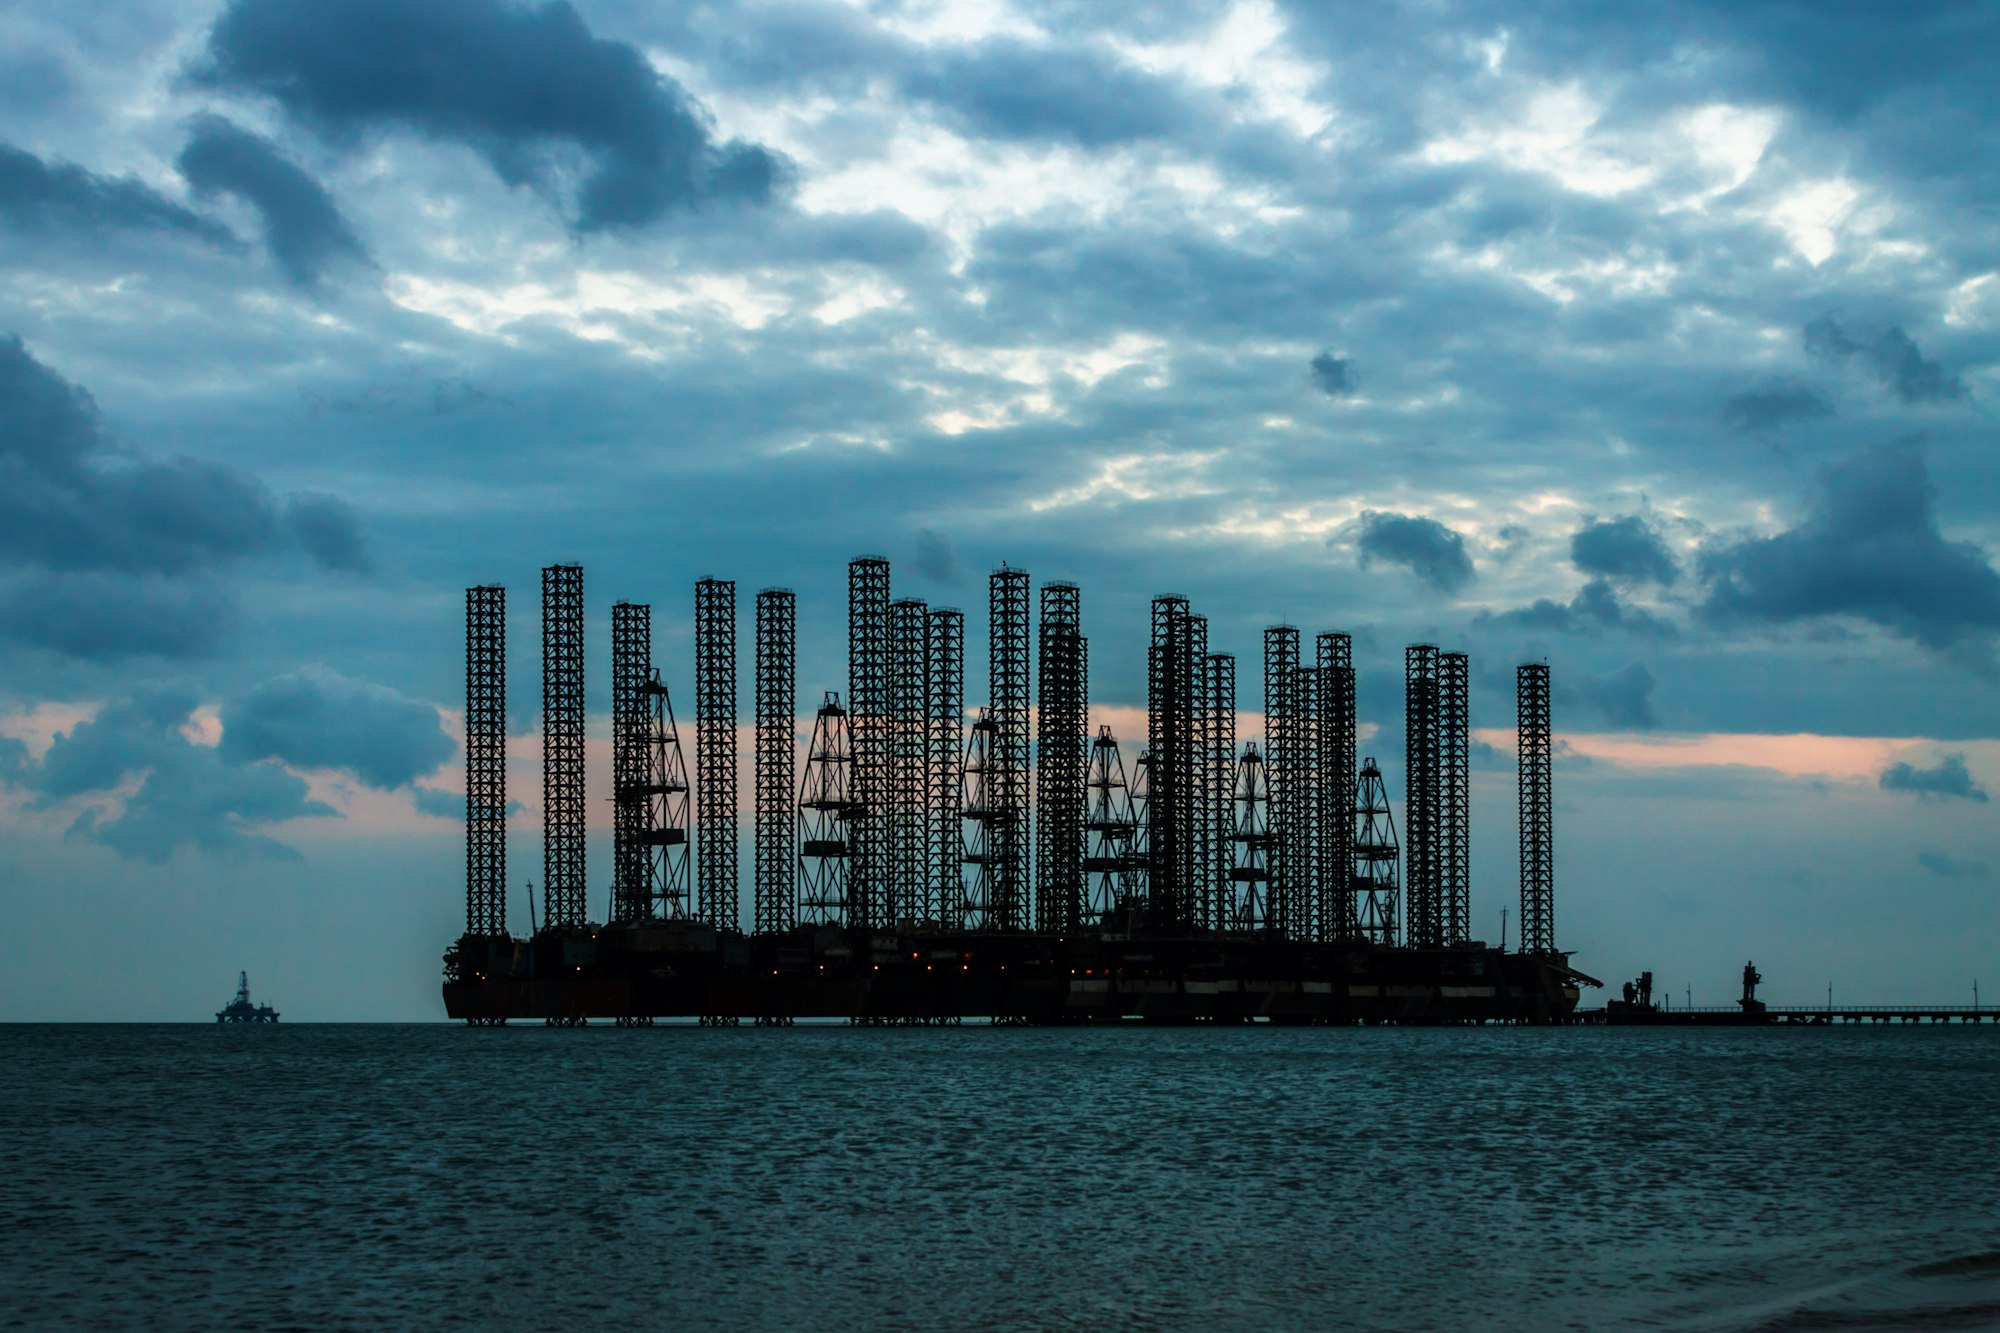 Oil platform in sea. Evening sky